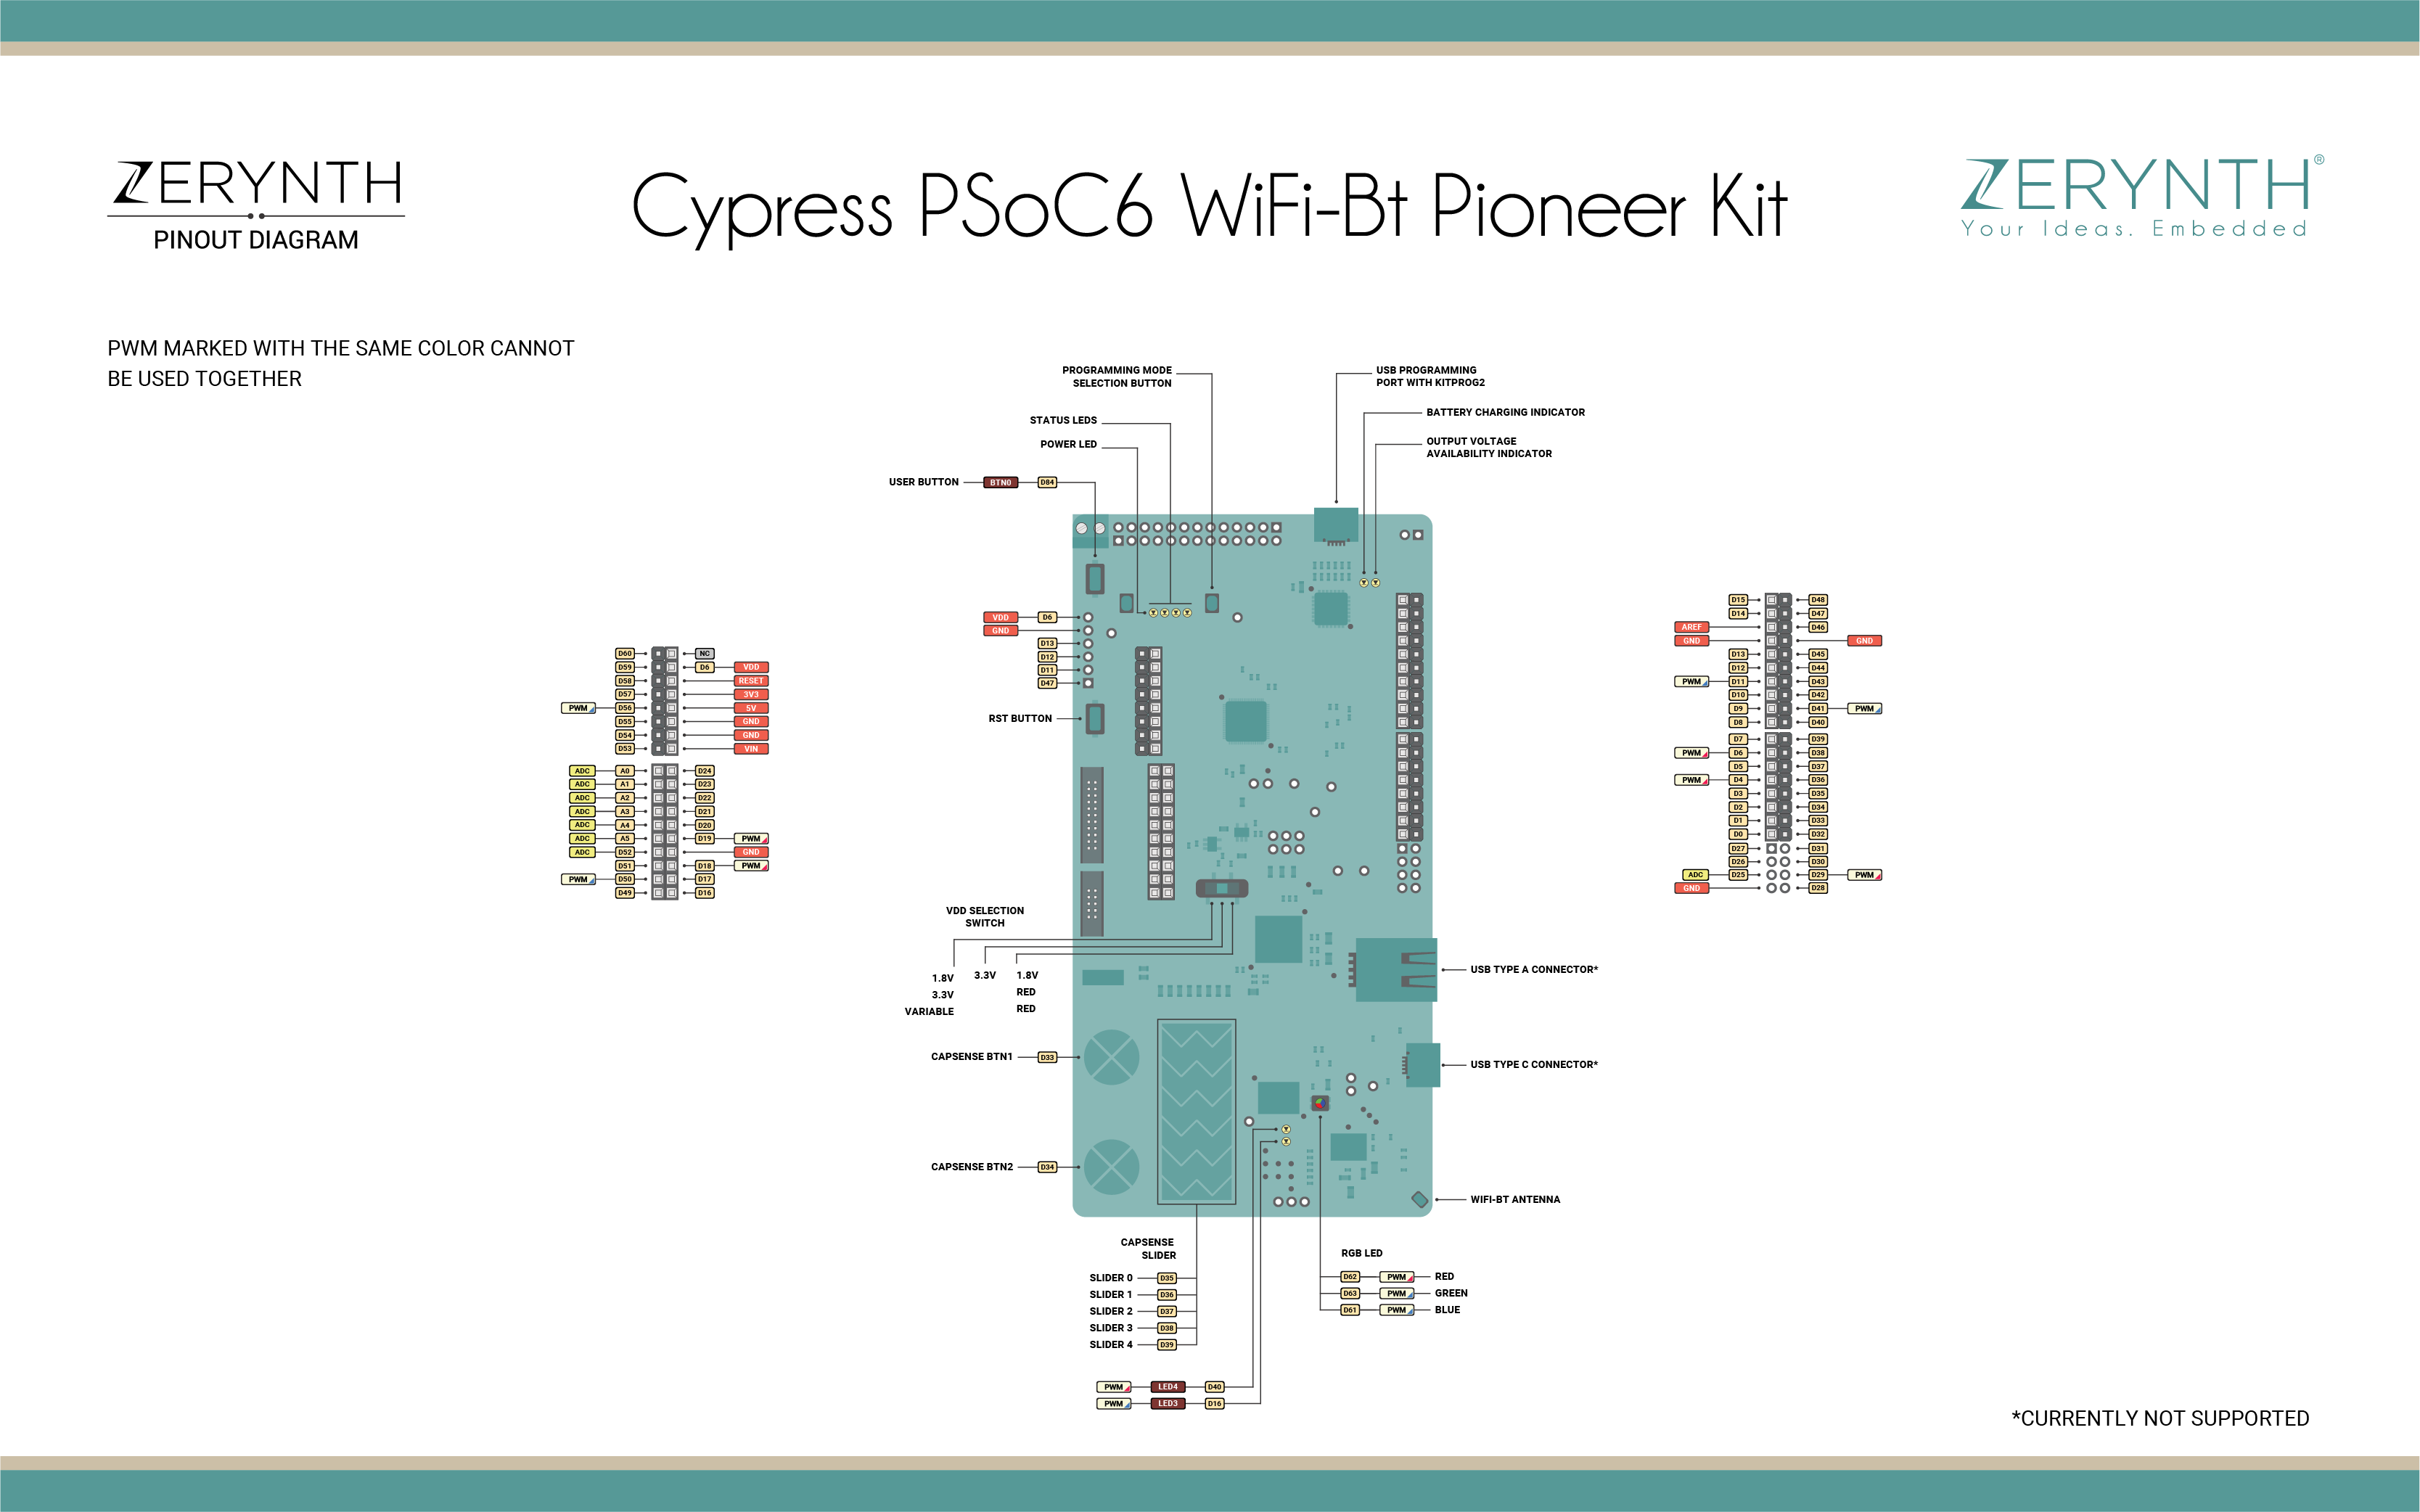 PSoC6 WiFi-Bt Pioneer Kit Pin Map